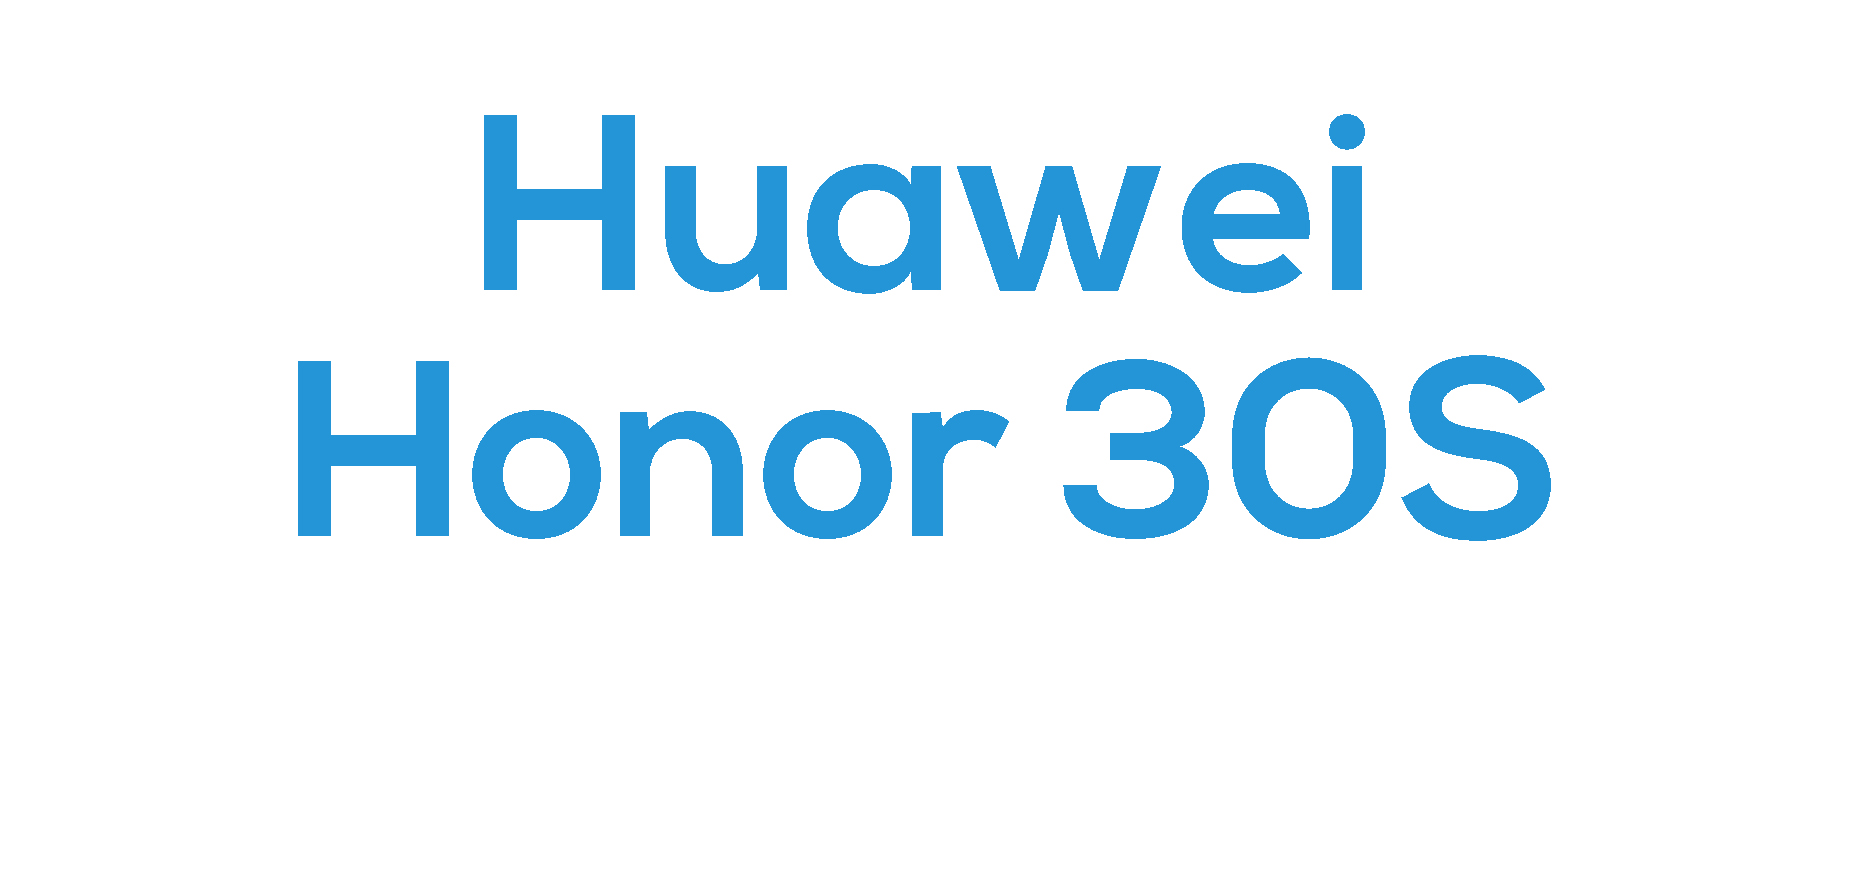 Honor 30S